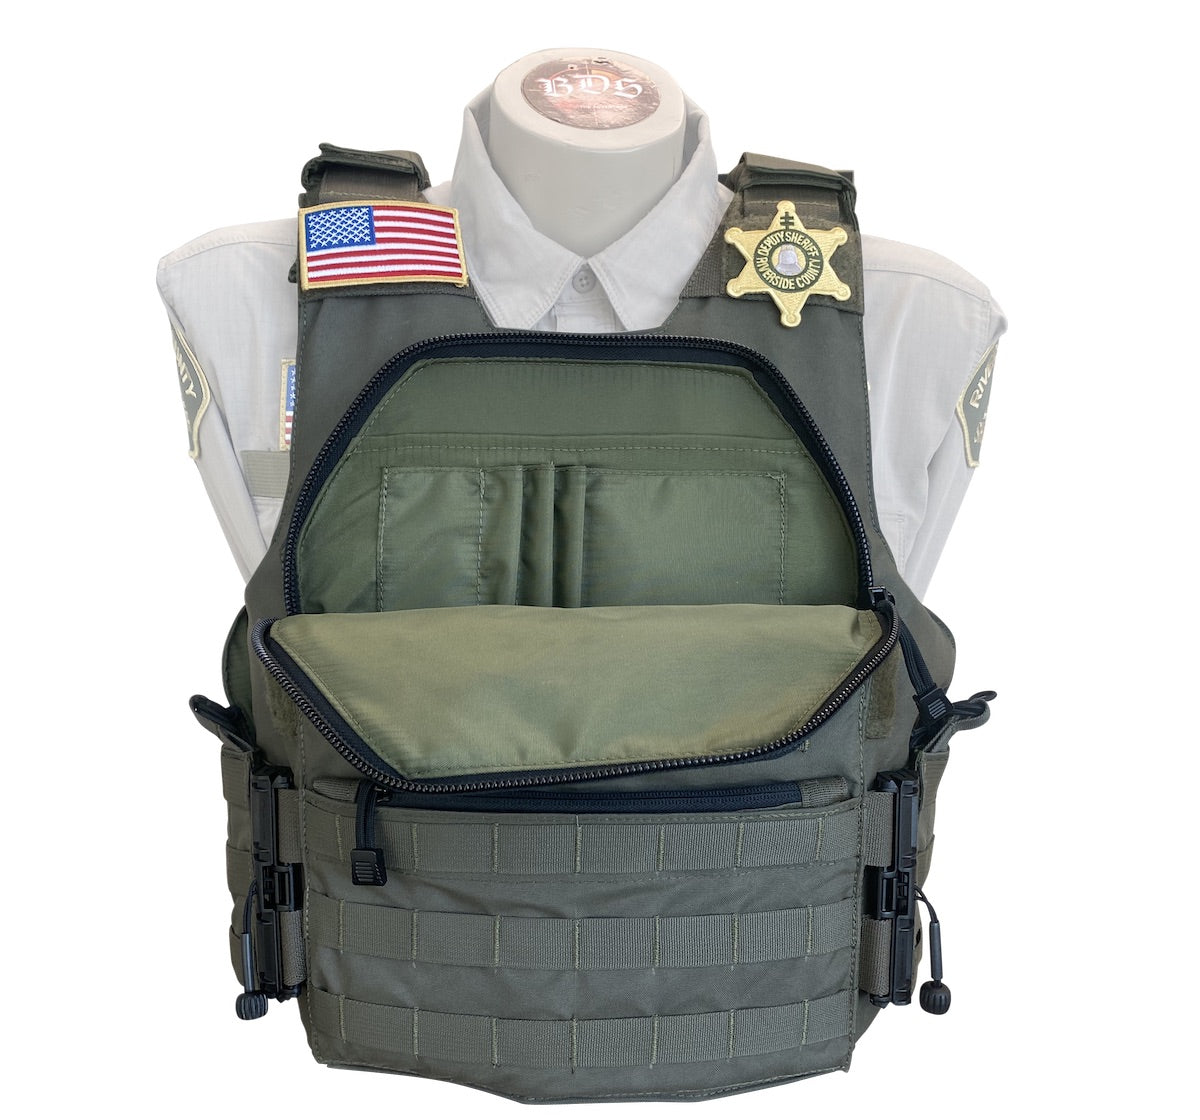 Police Molle Vest Attachments